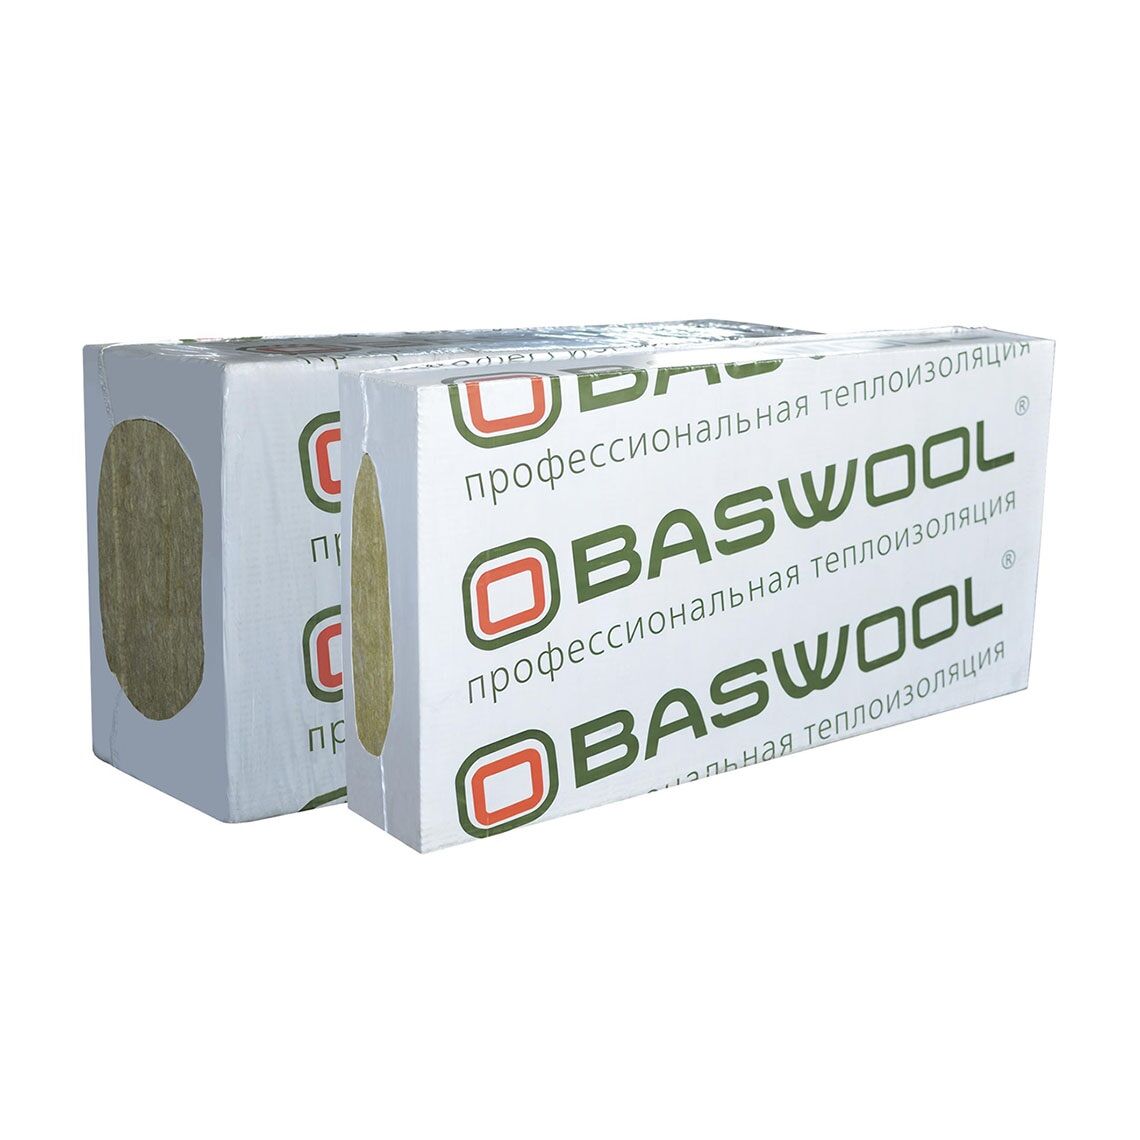 Утеплитель Baswool Фасад 140 100x600x1200 мм уп 3 шт 2,16 м2 0,216м3